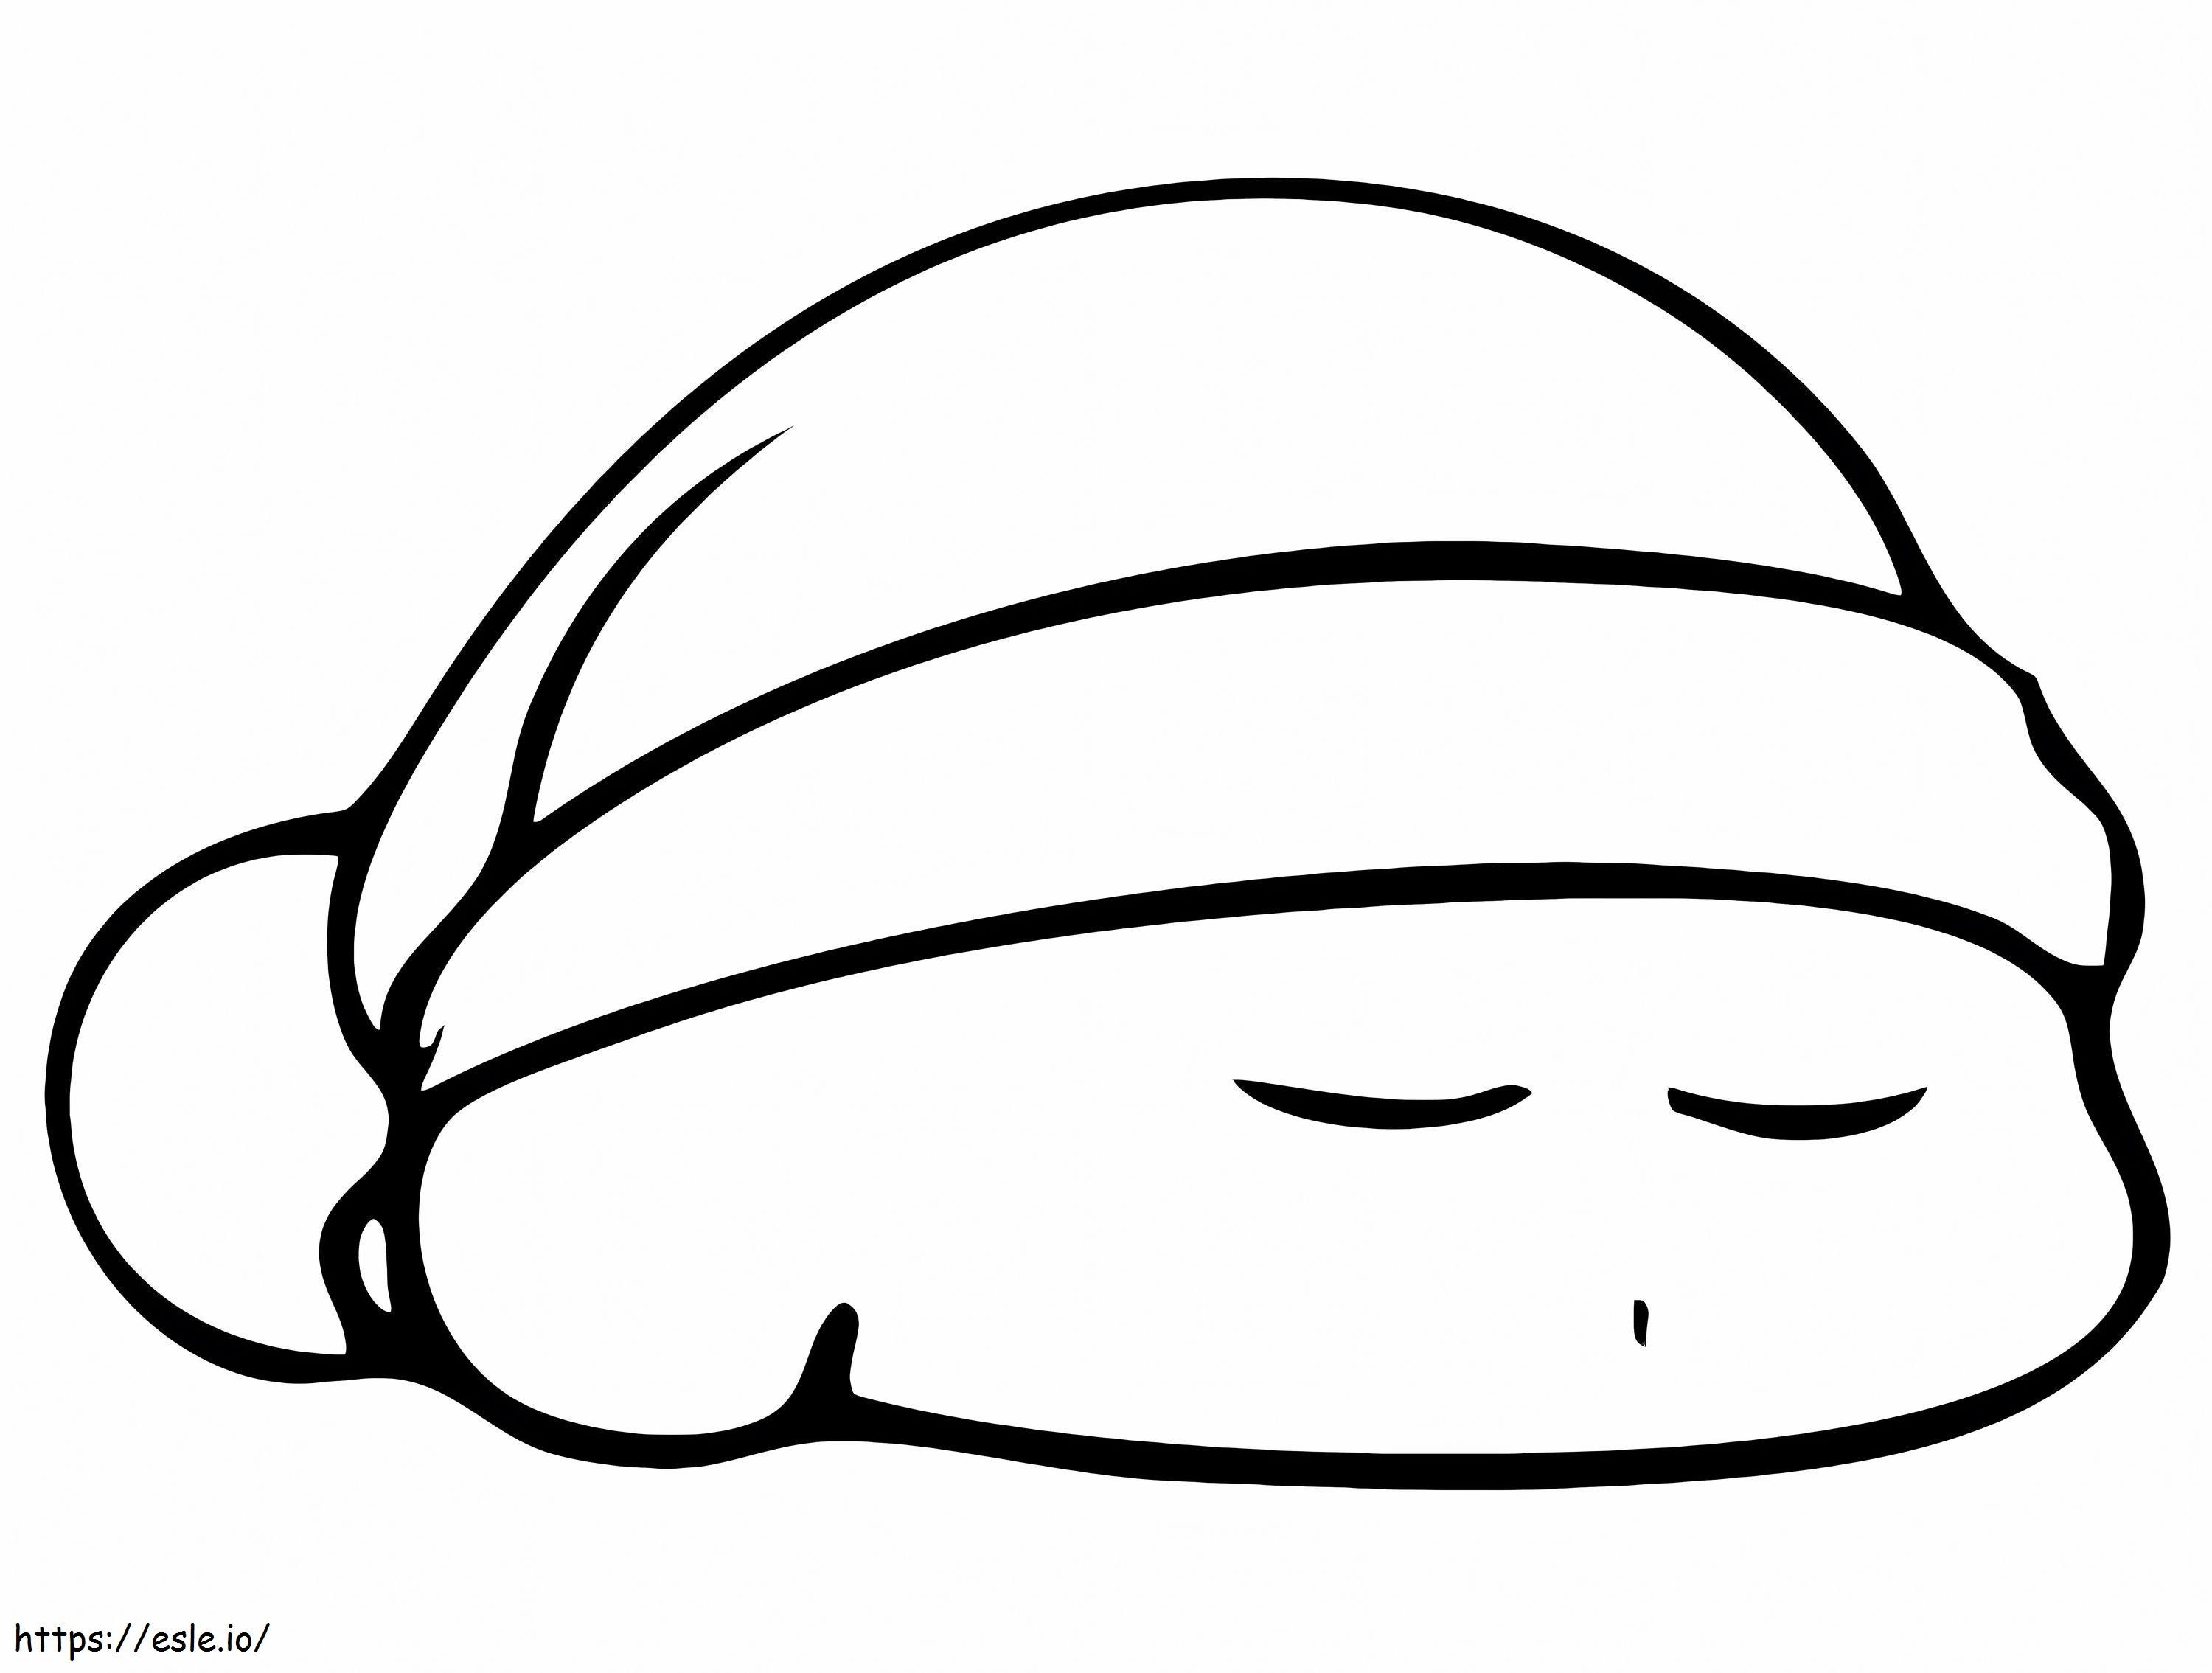 Kirby dormindo para colorir